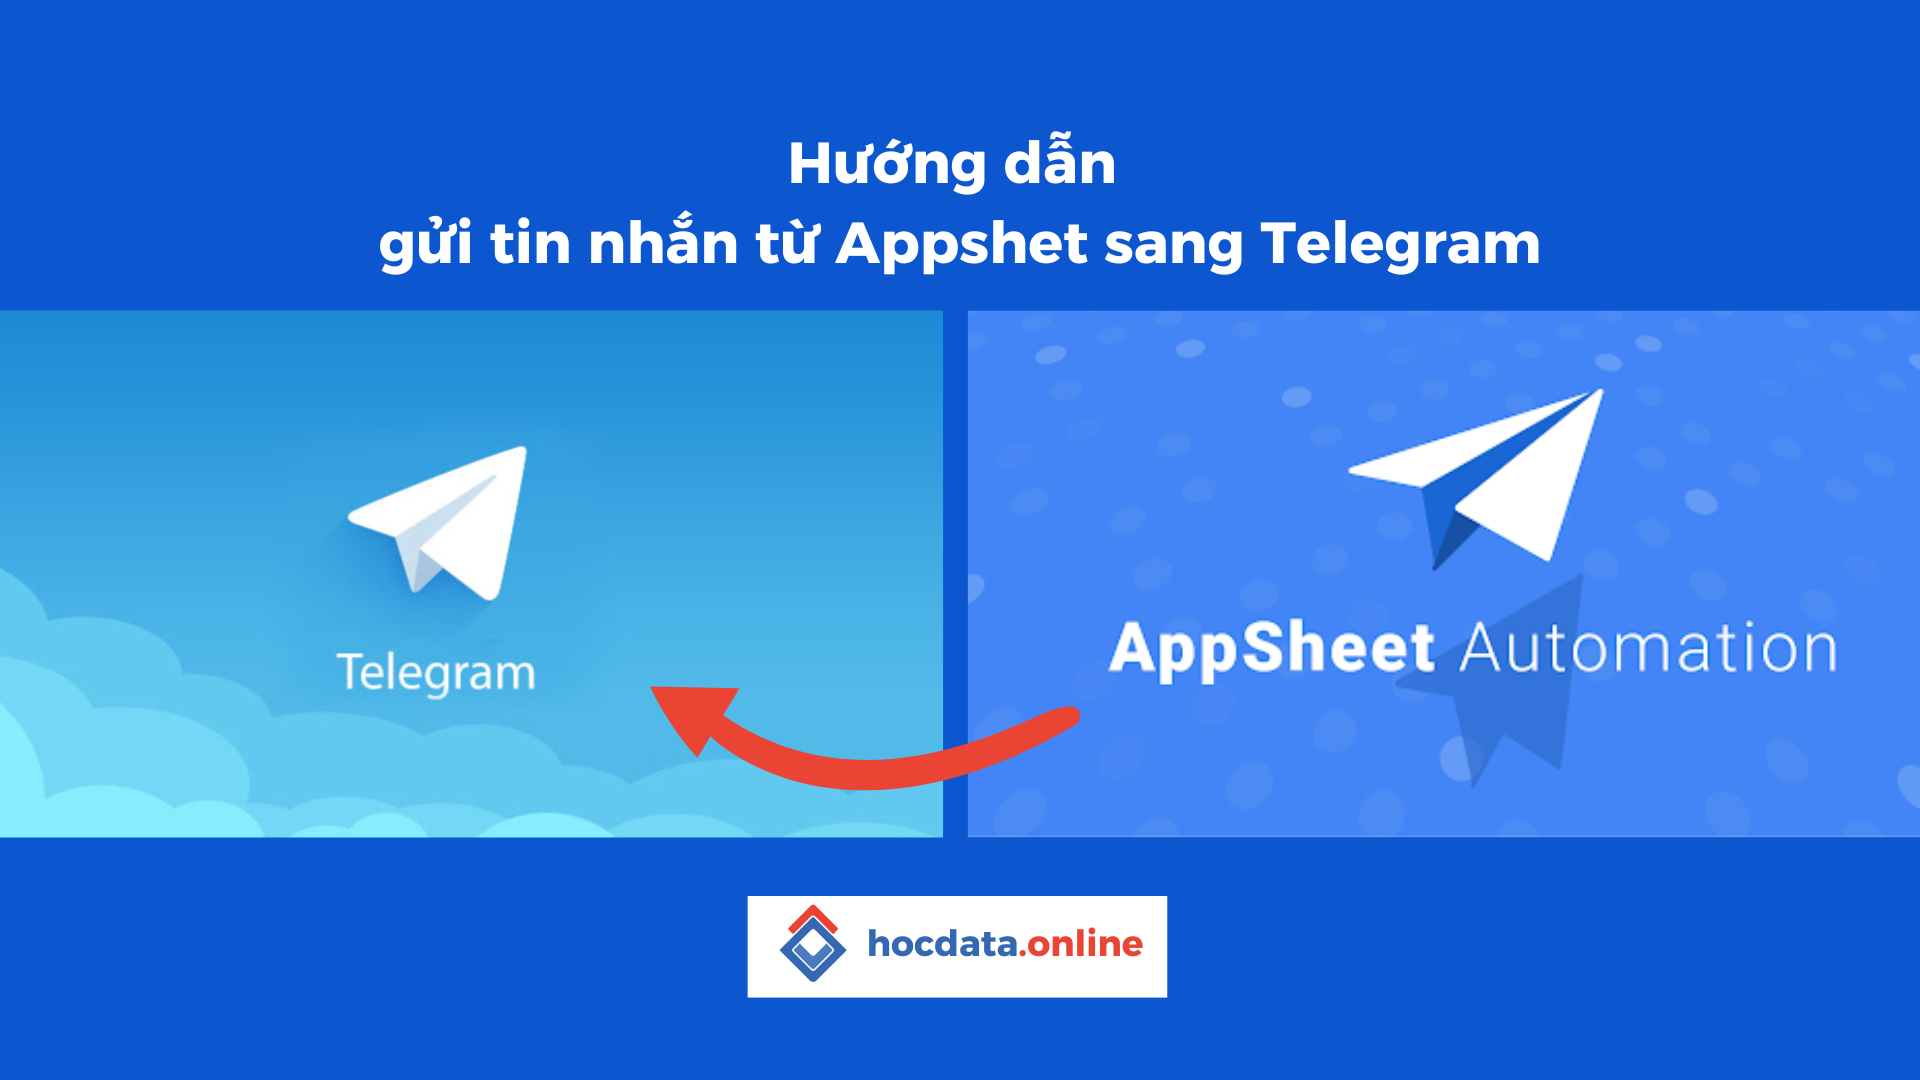 Hướng dẫn kết nối Appsheet gửi tin nhắn tới telegram